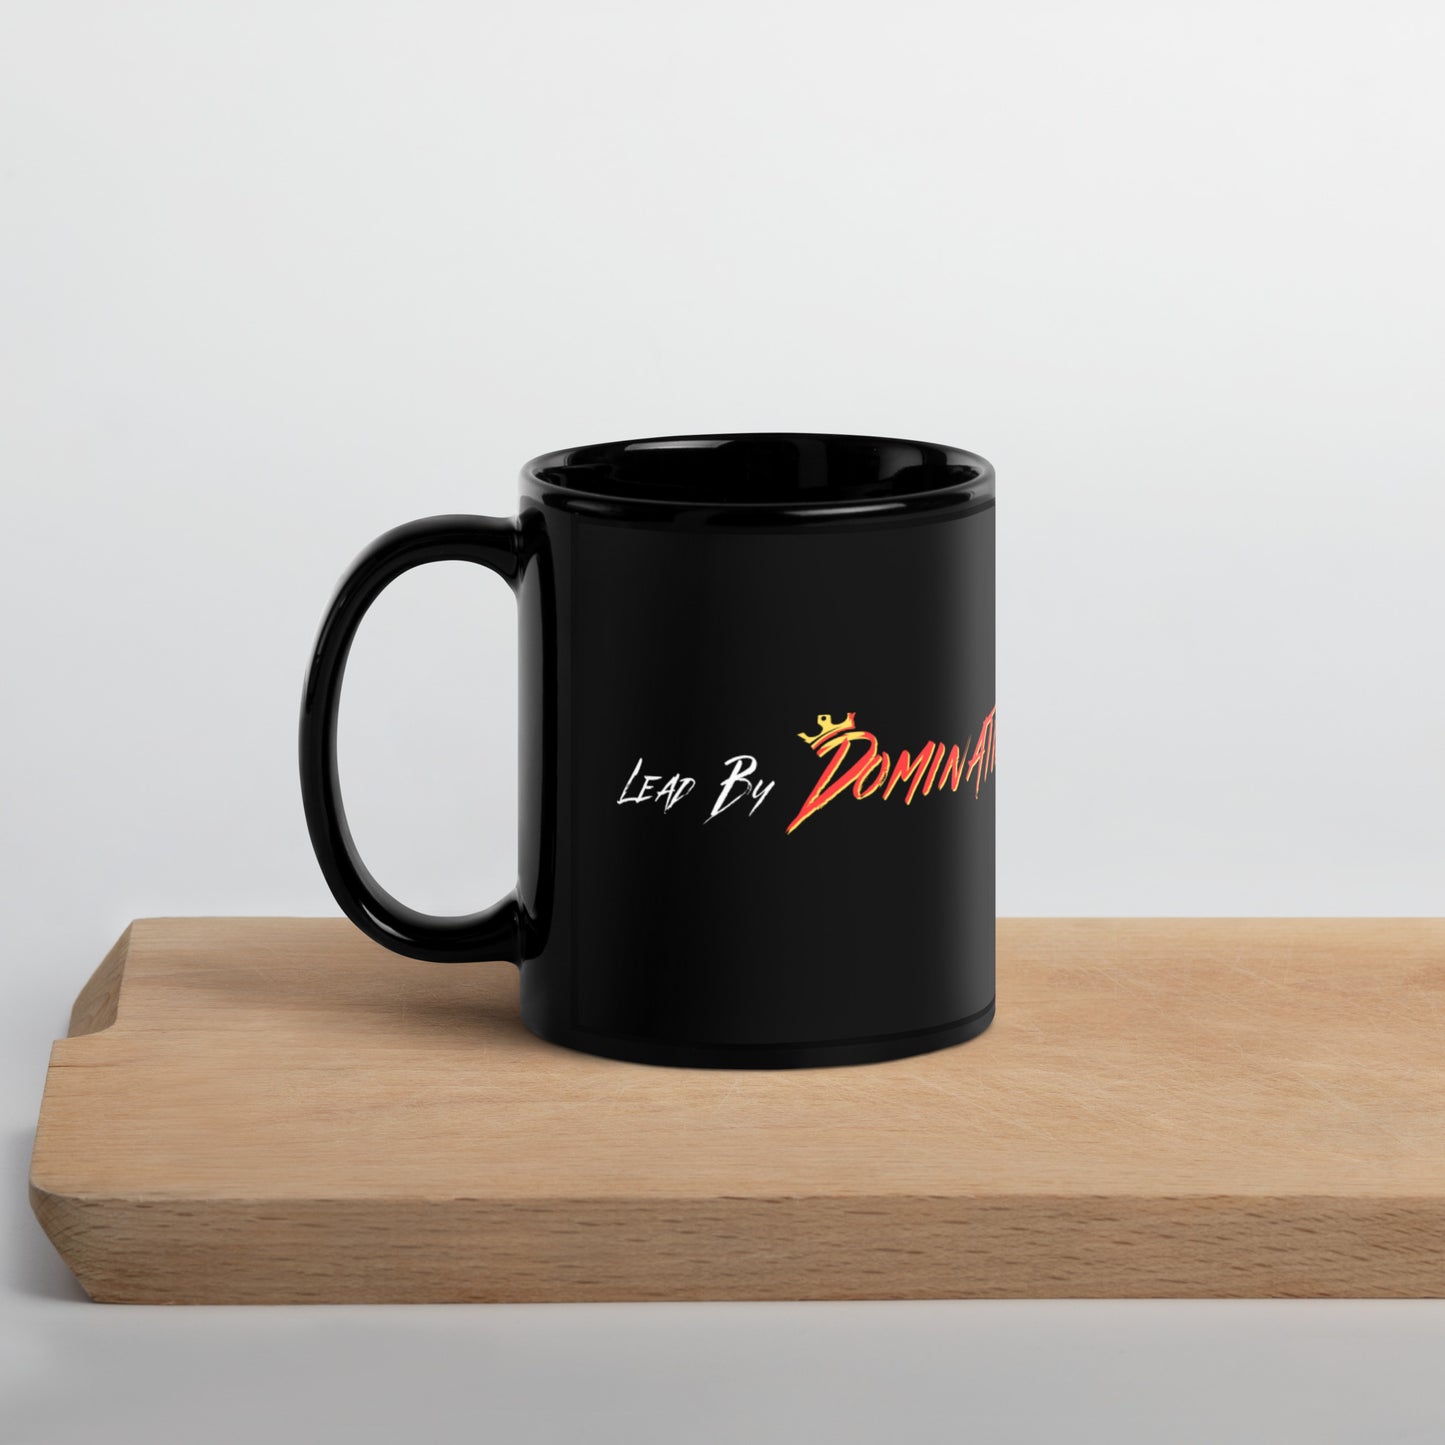 AI Final Boss Battle Coffee Mug - Retro Artwork for DOMINATING the morning!